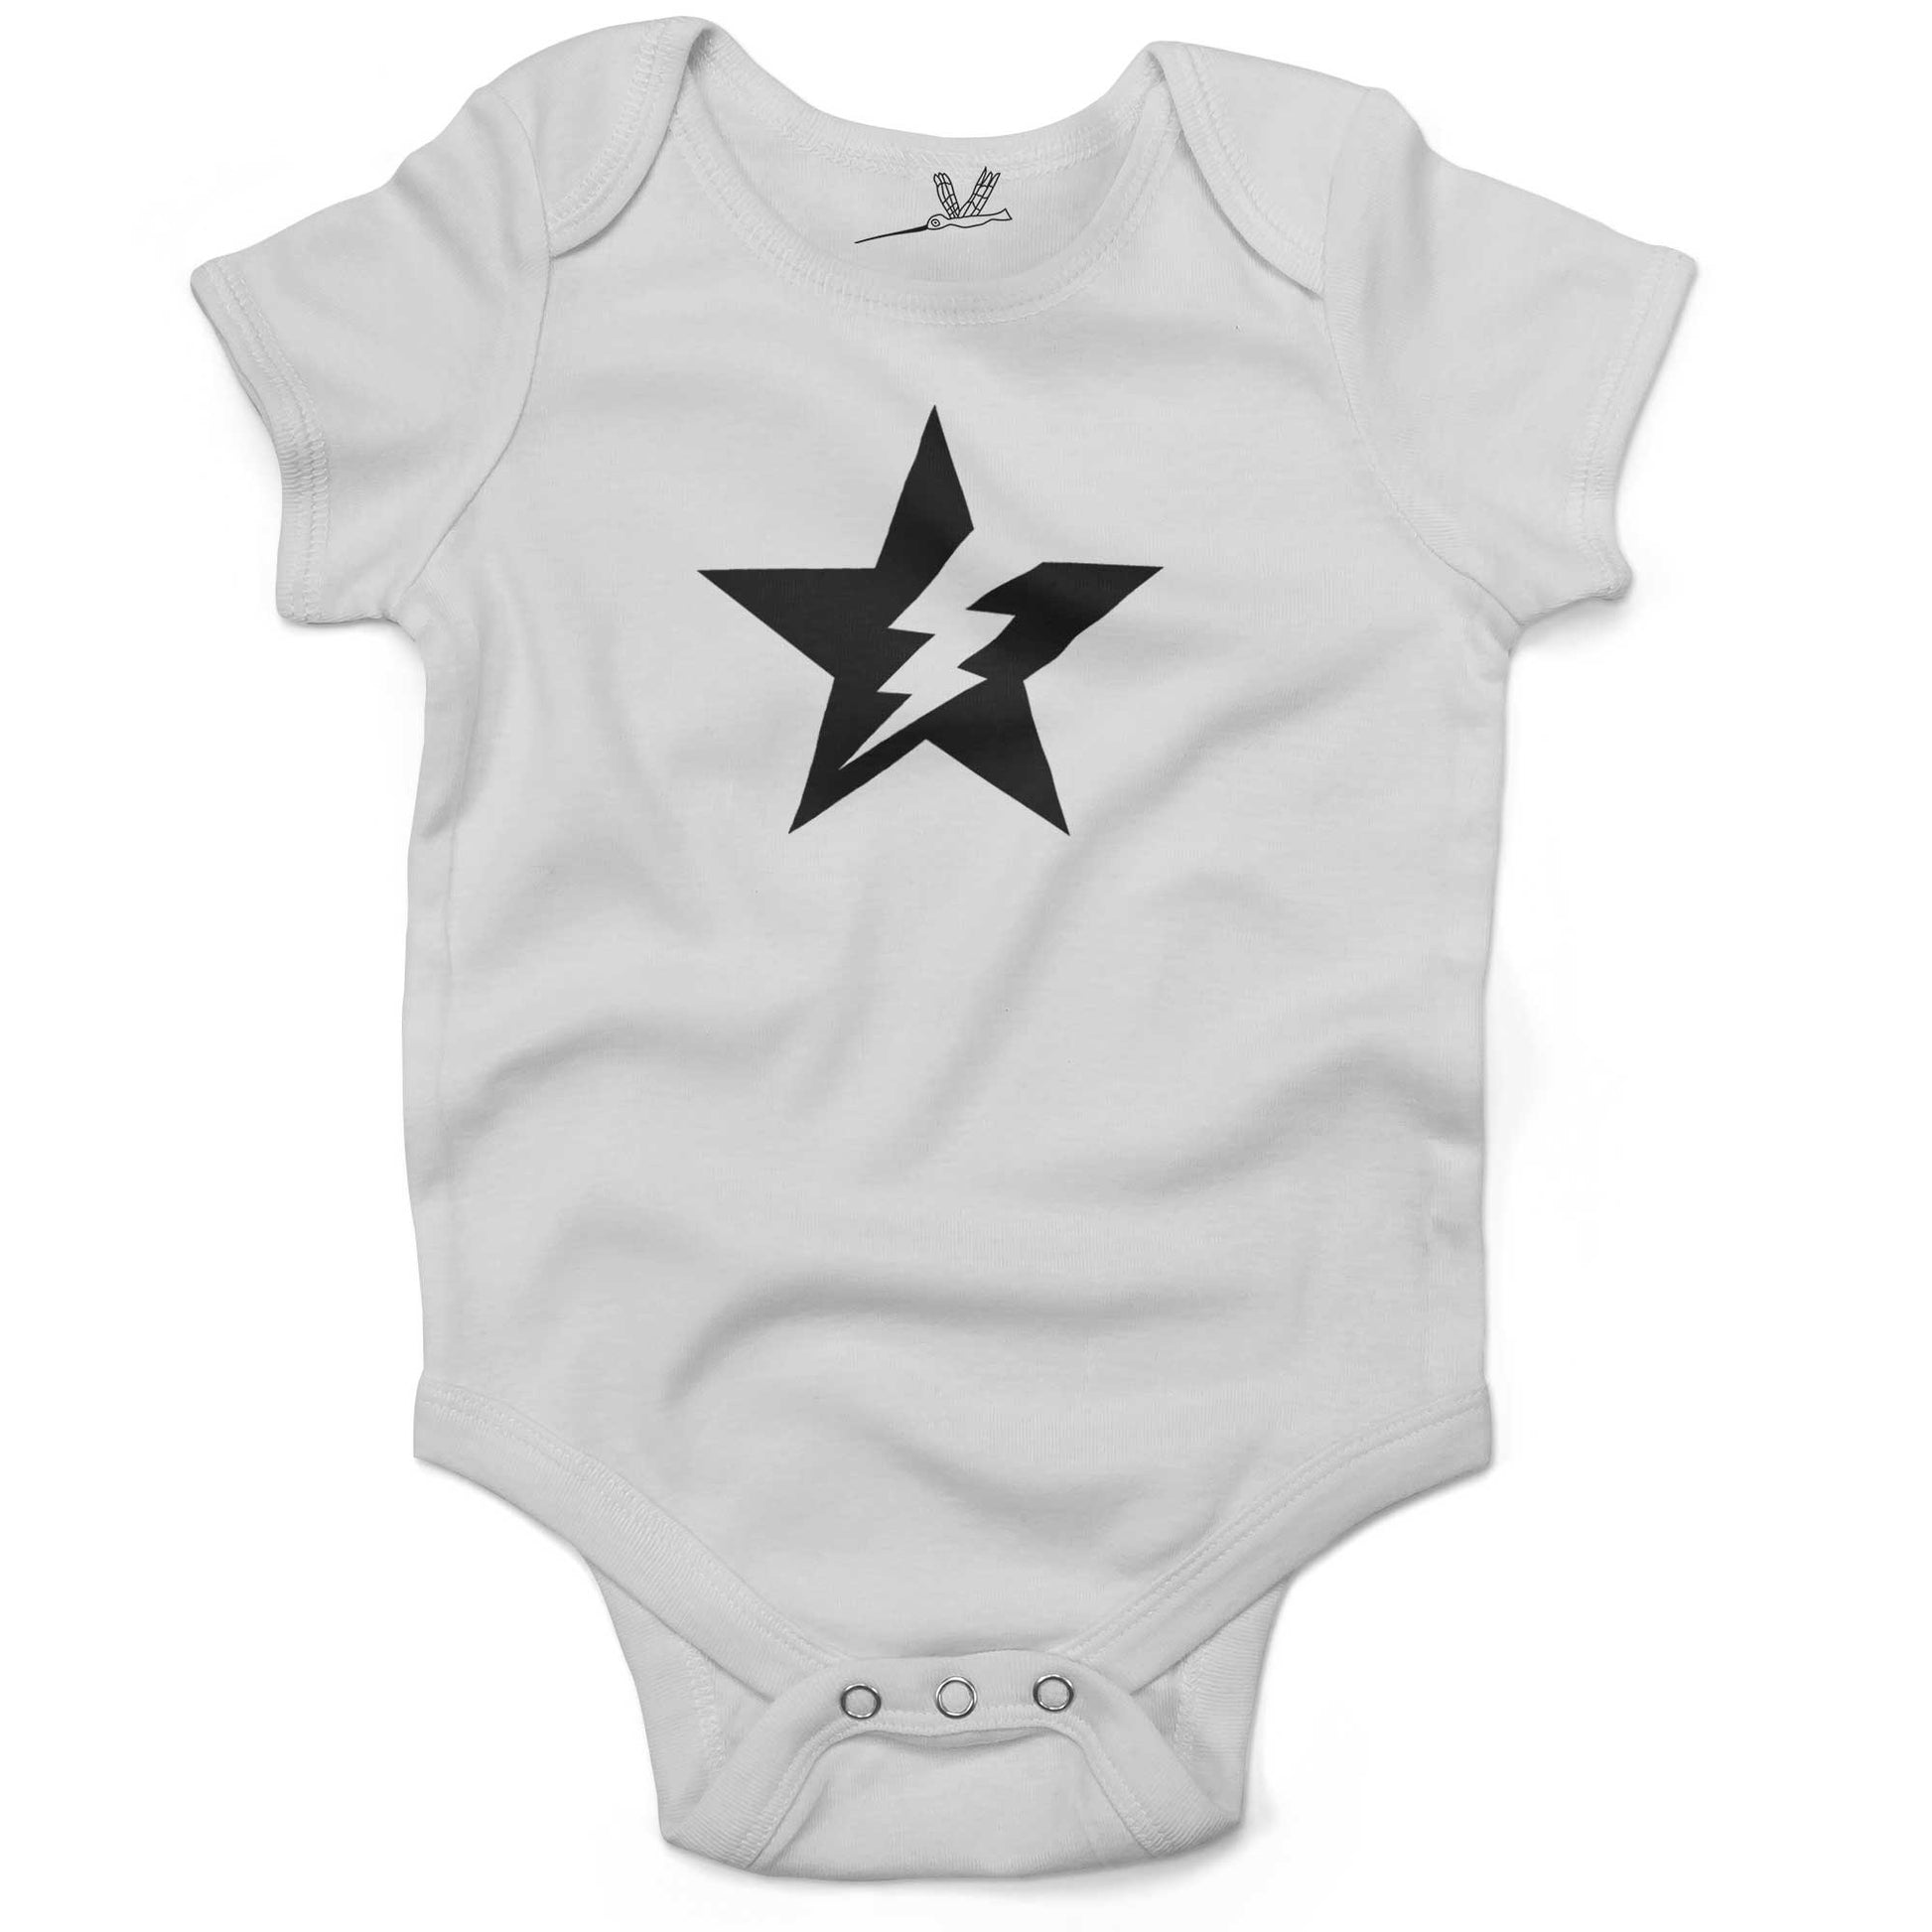 Star Bolt Infant Bodysuit or Raglan Baby Tee-White-3-6 months